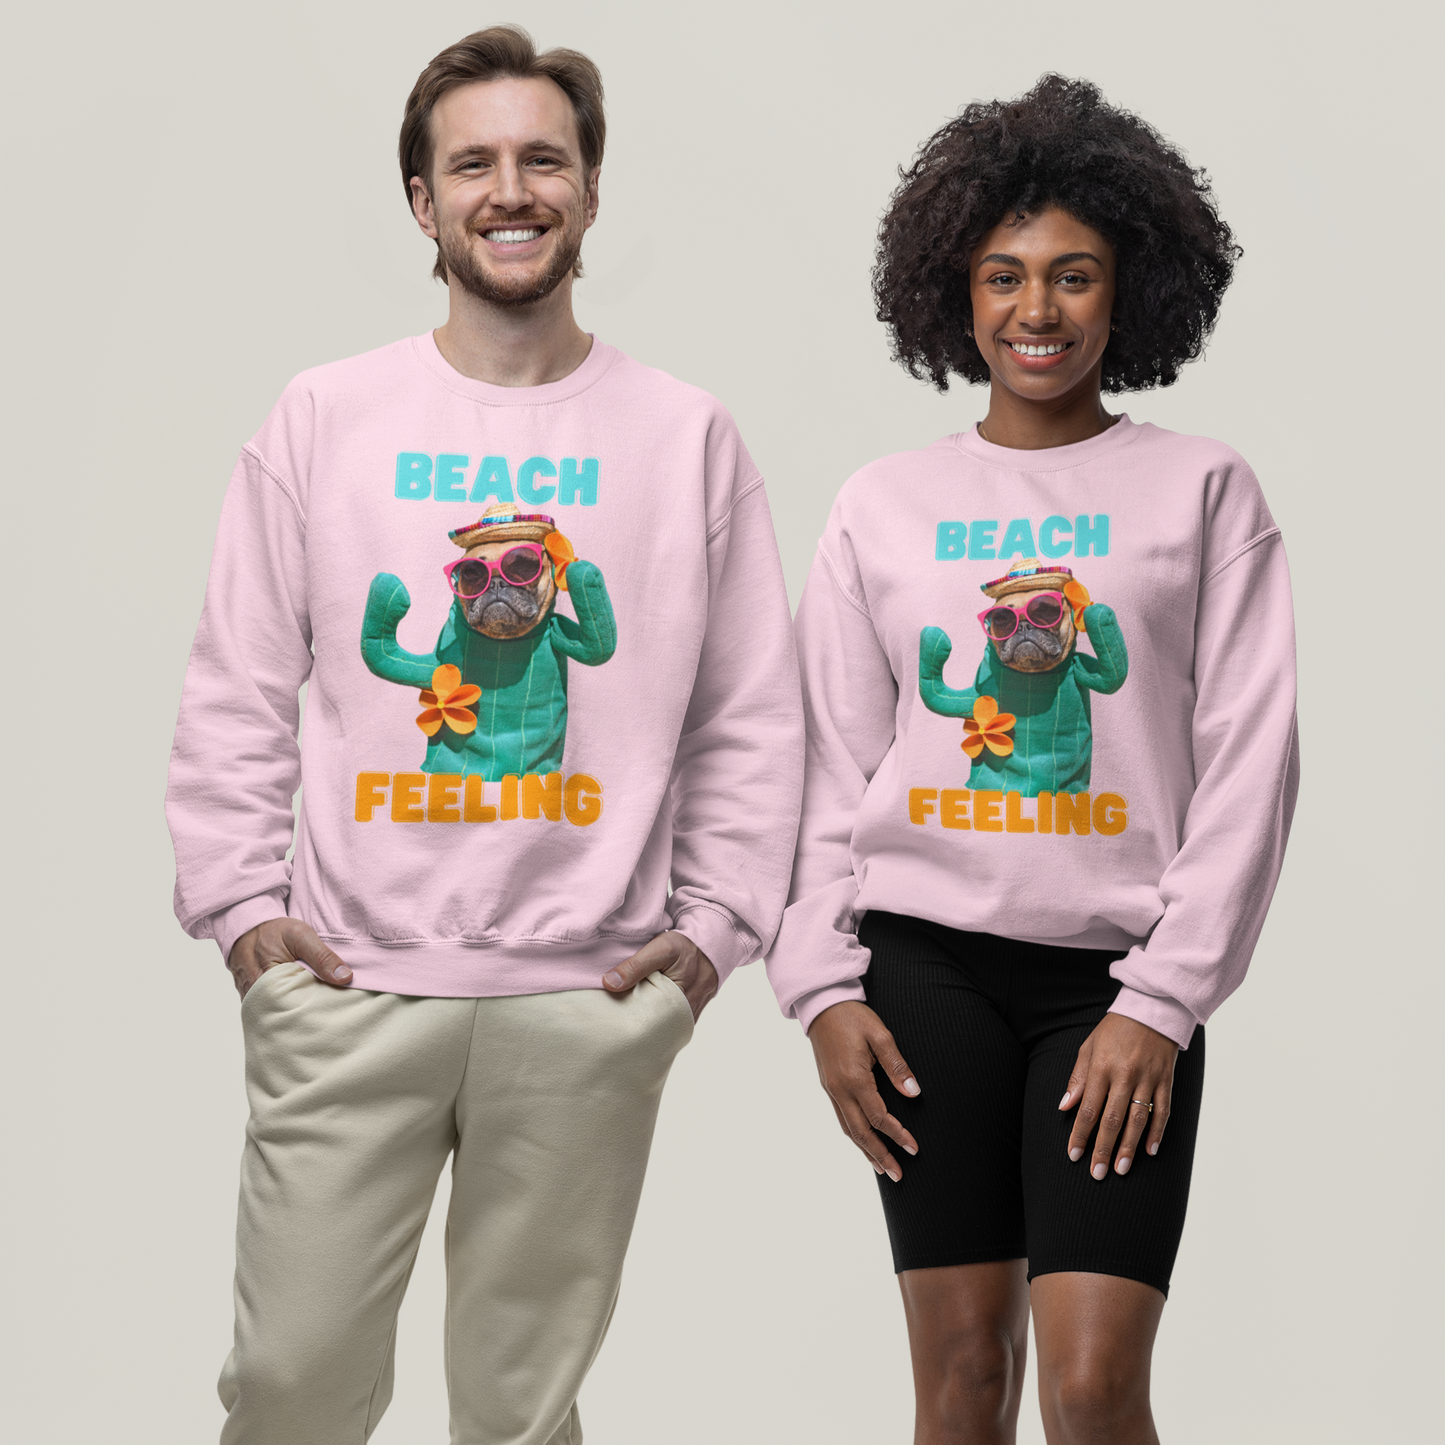 Dog "Beach Feeling" - Sweatshirt Unisex